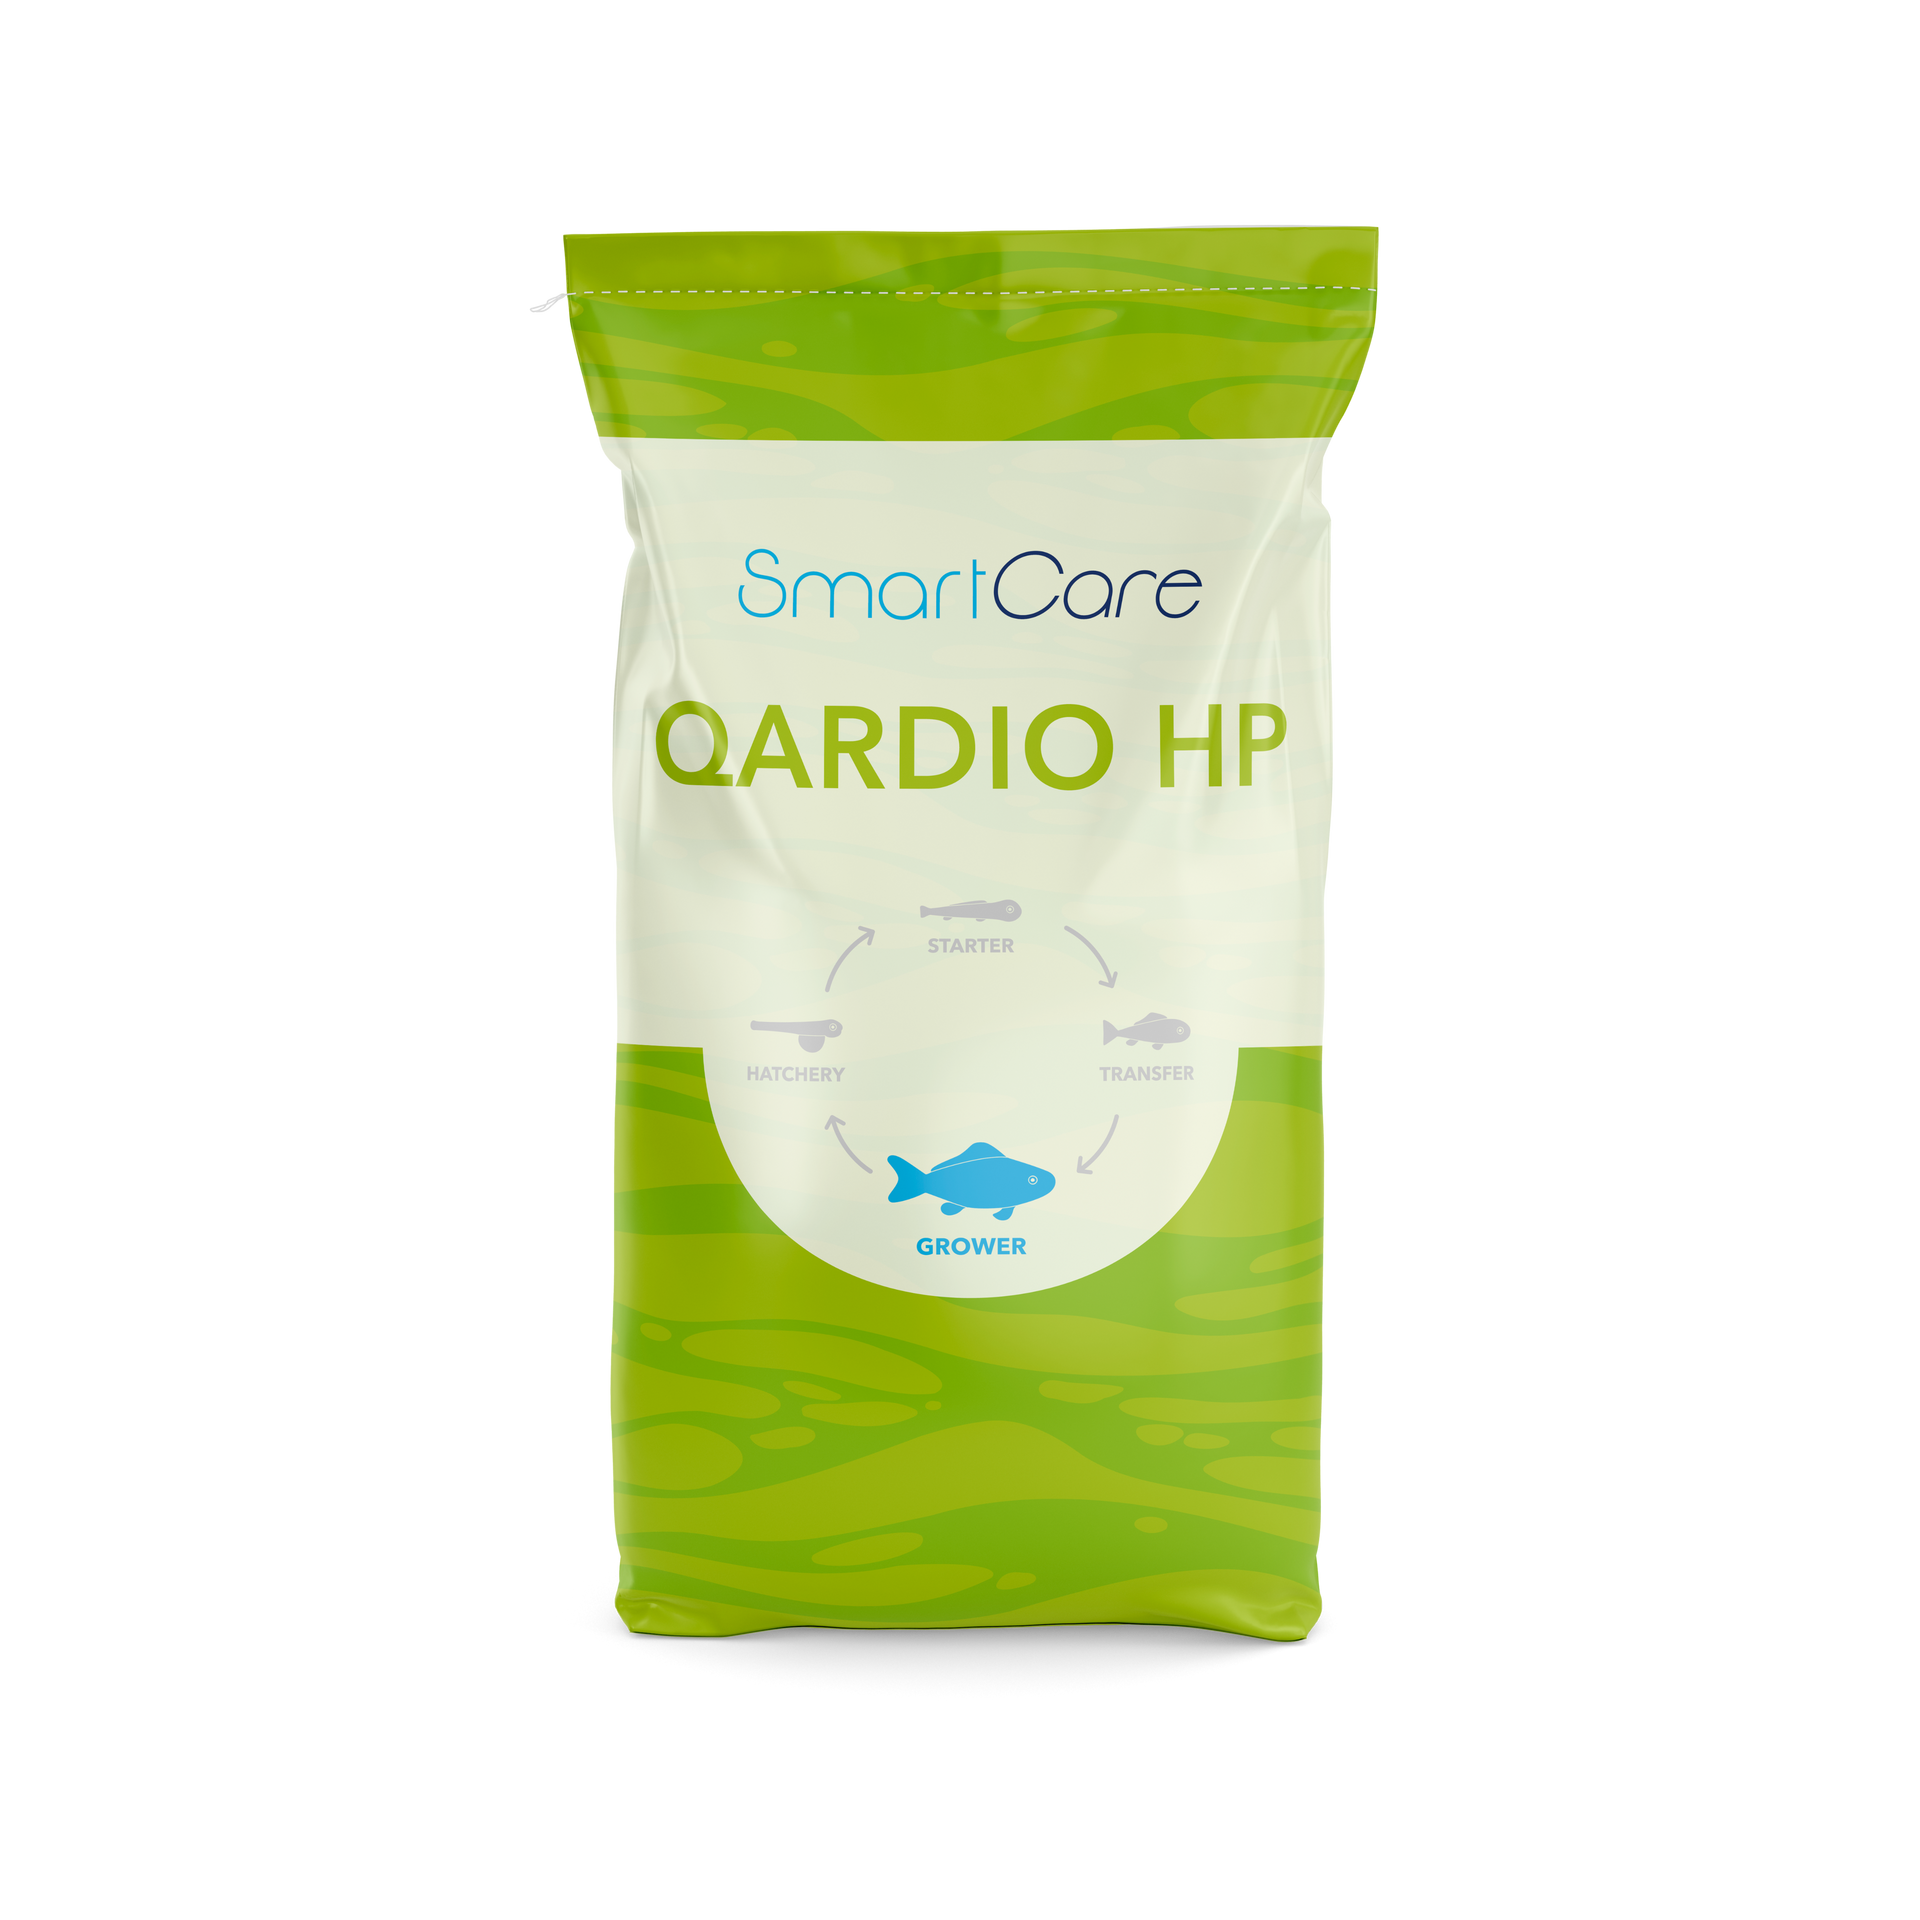 SmartCare Qardio HP health feed for atlantic salmon